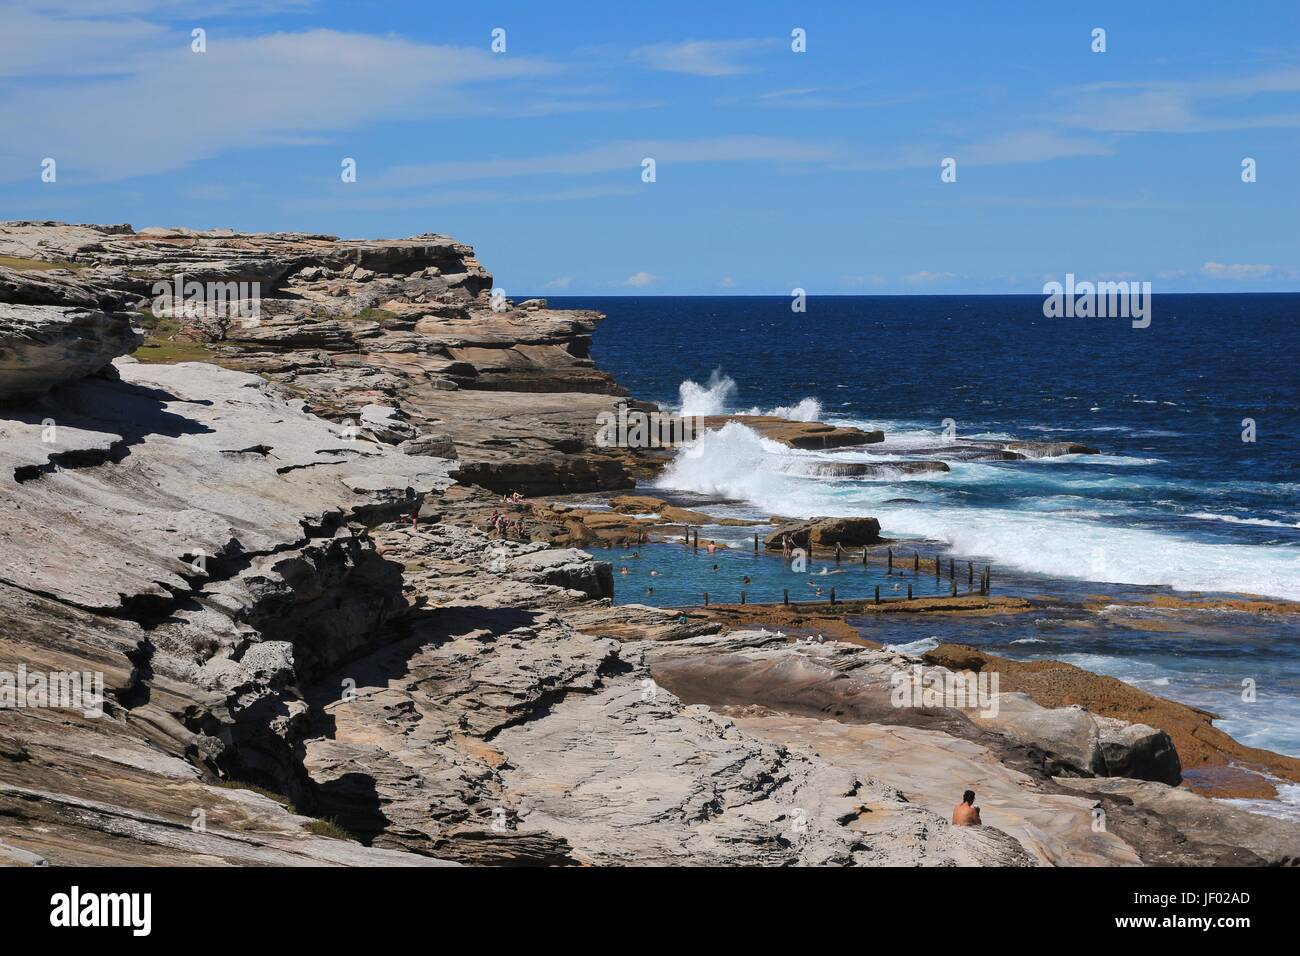 Rock pool at Maroubra Beach, Australia Stock Photo